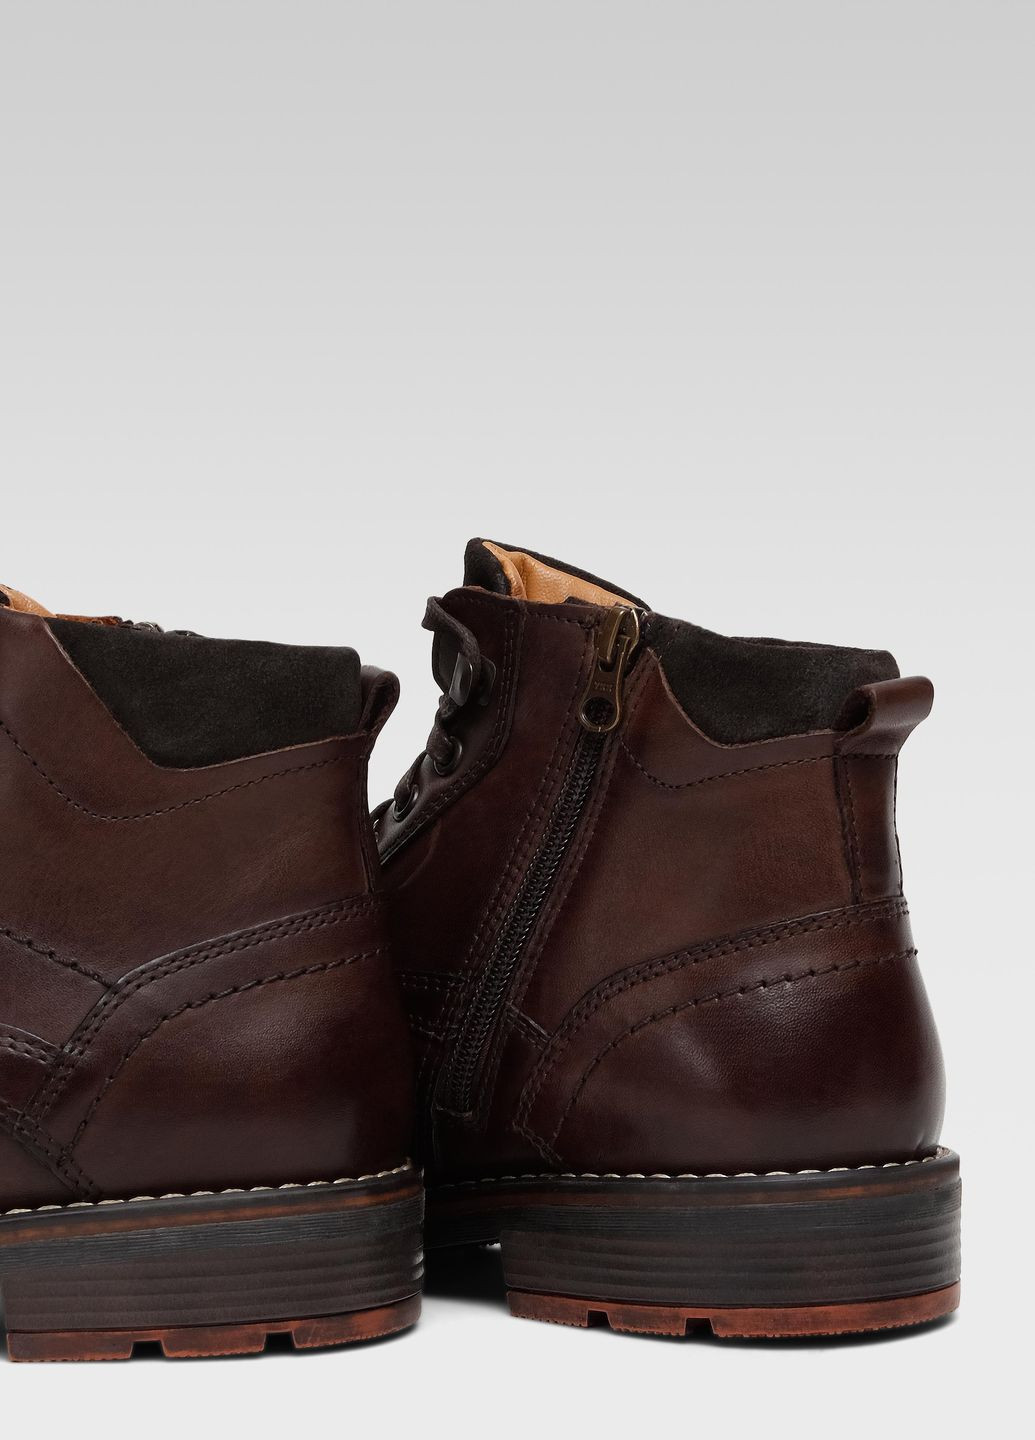 Темно-коричневые зимние черевики mb-pacino-03 Lasocki